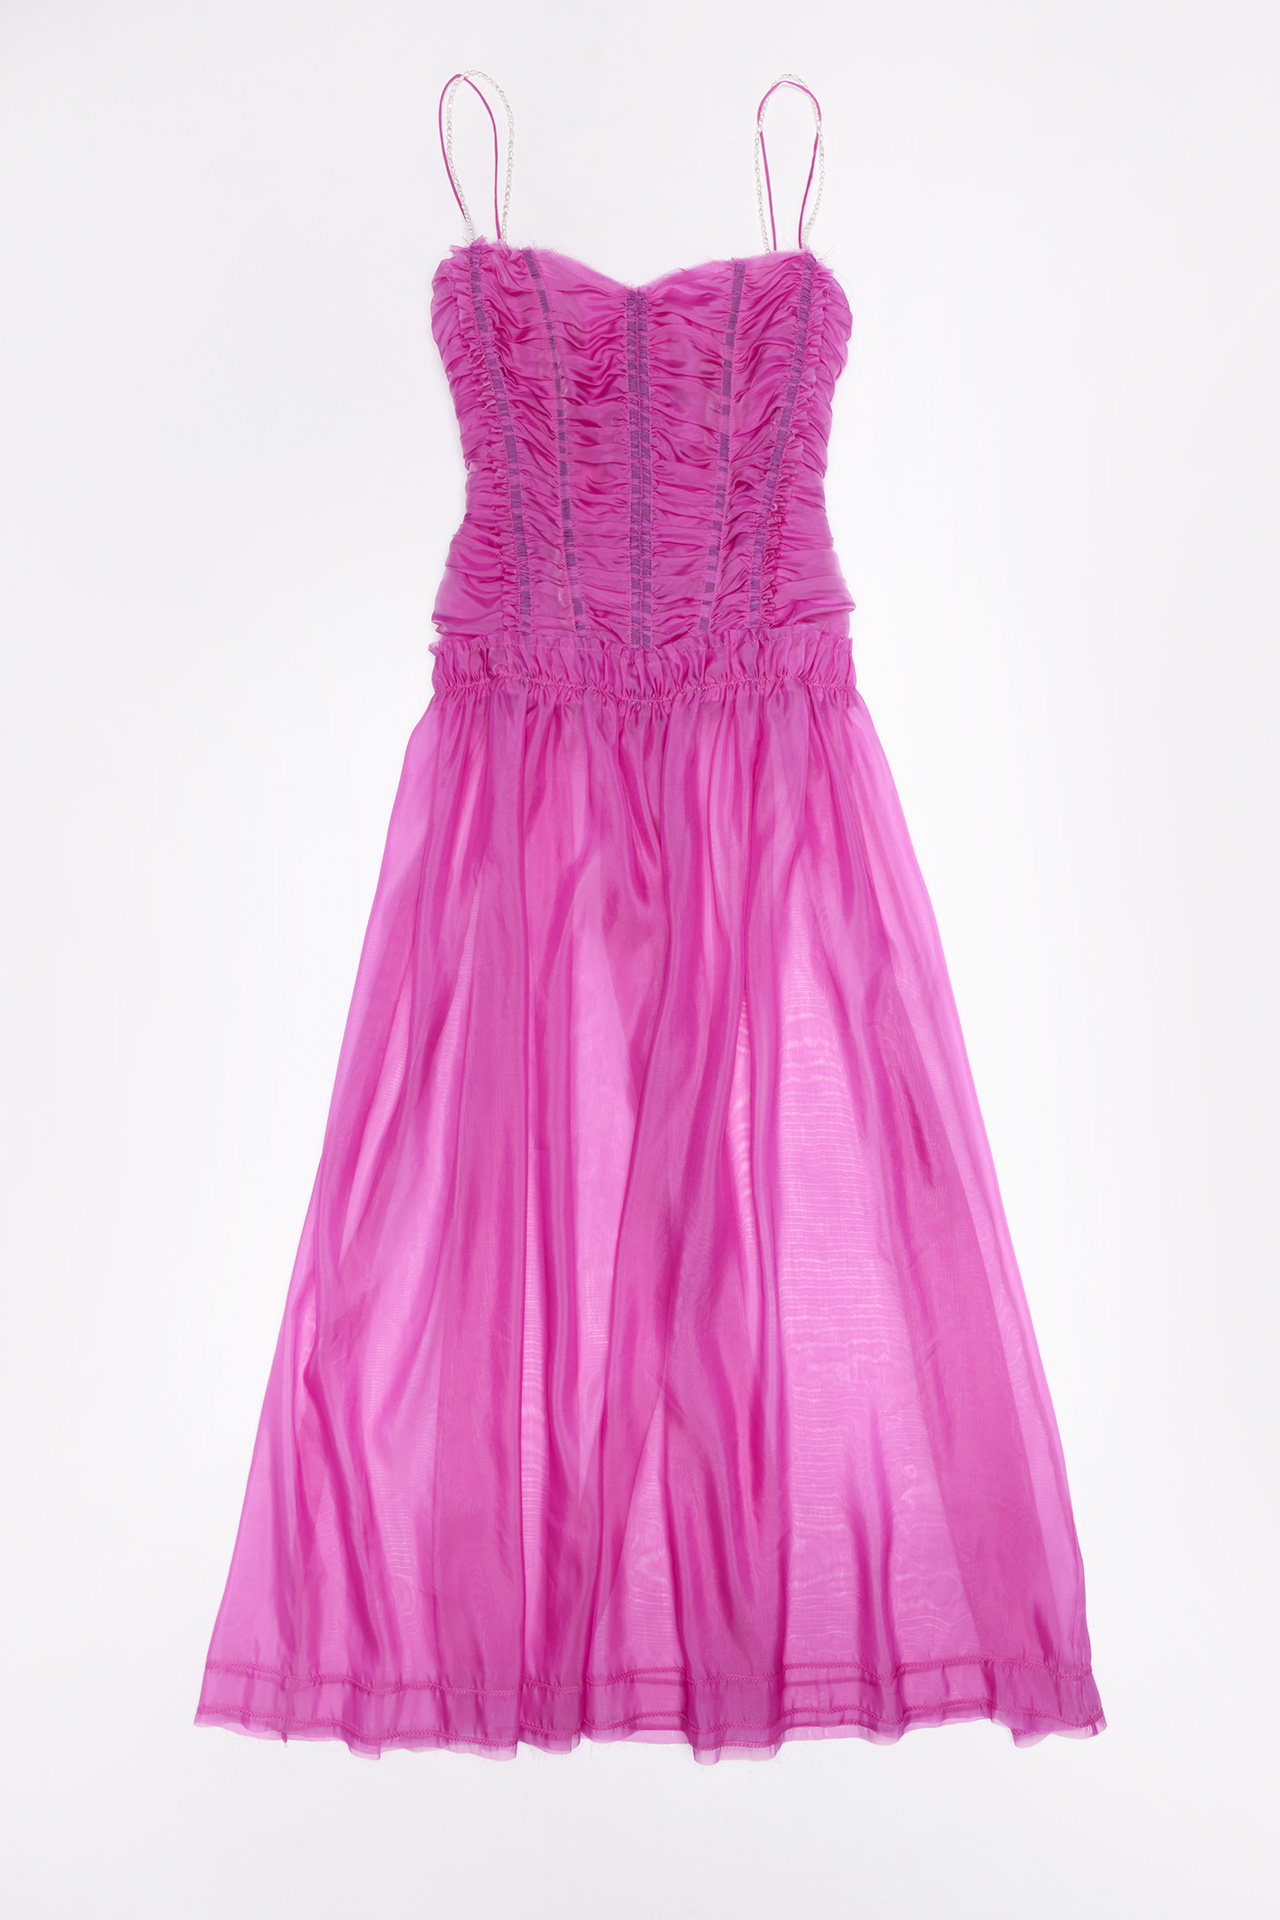 Franca Pink Dress | Miista Europe | Made in Spain